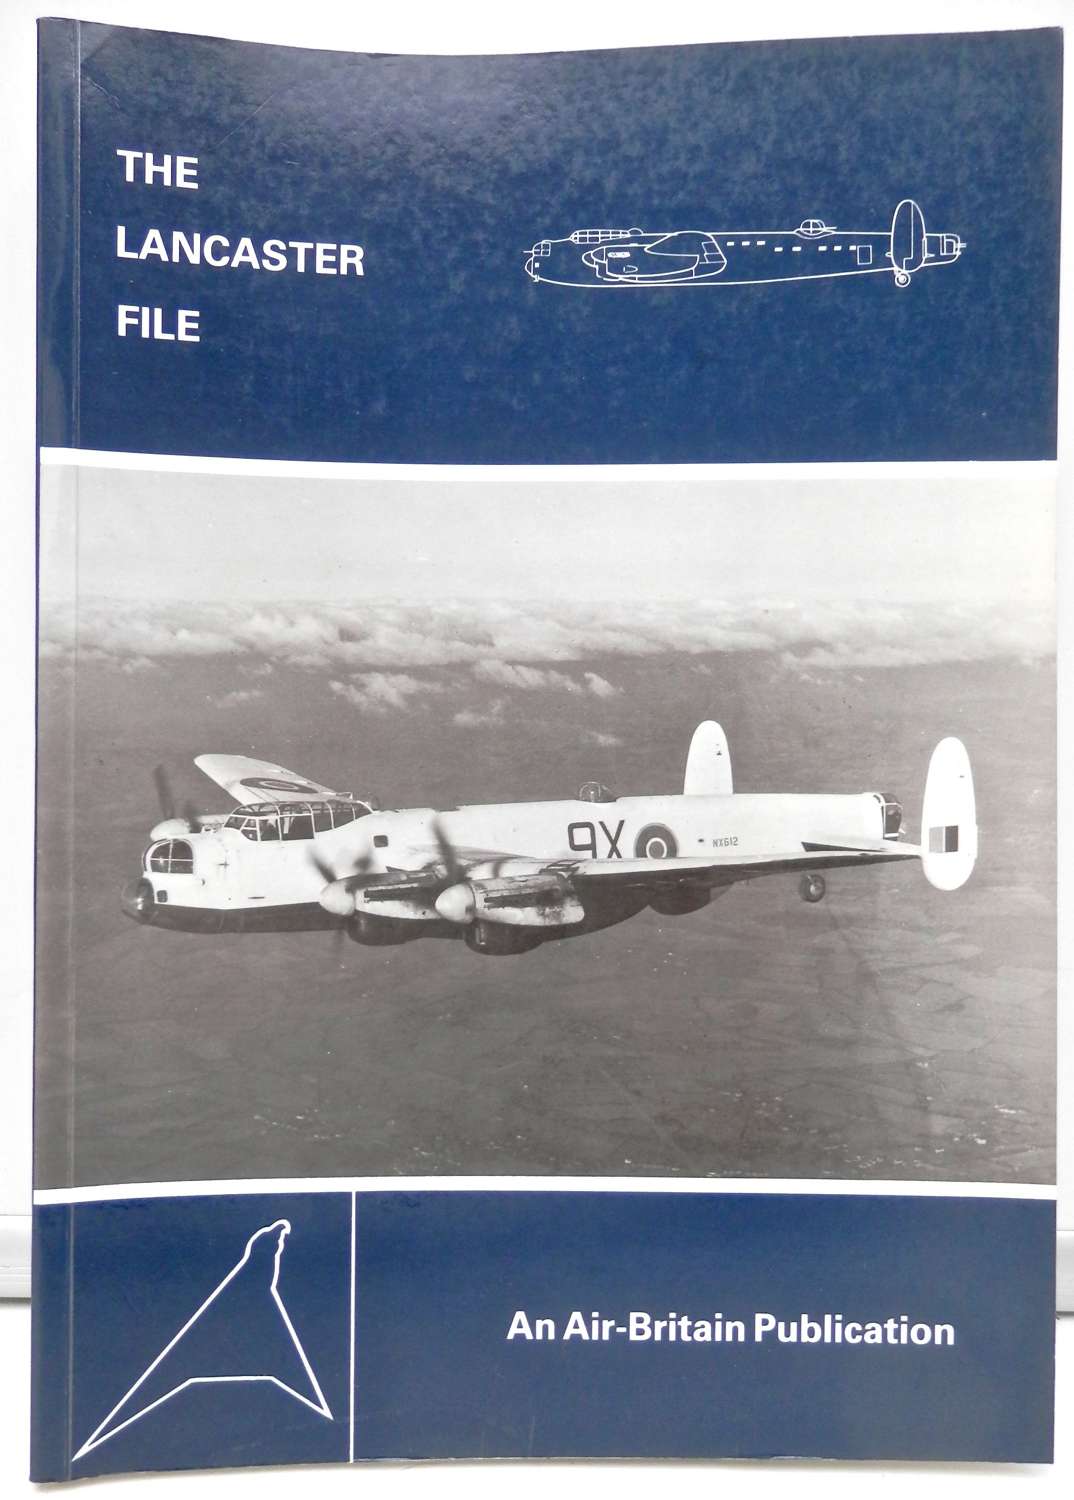 The Lancaster file